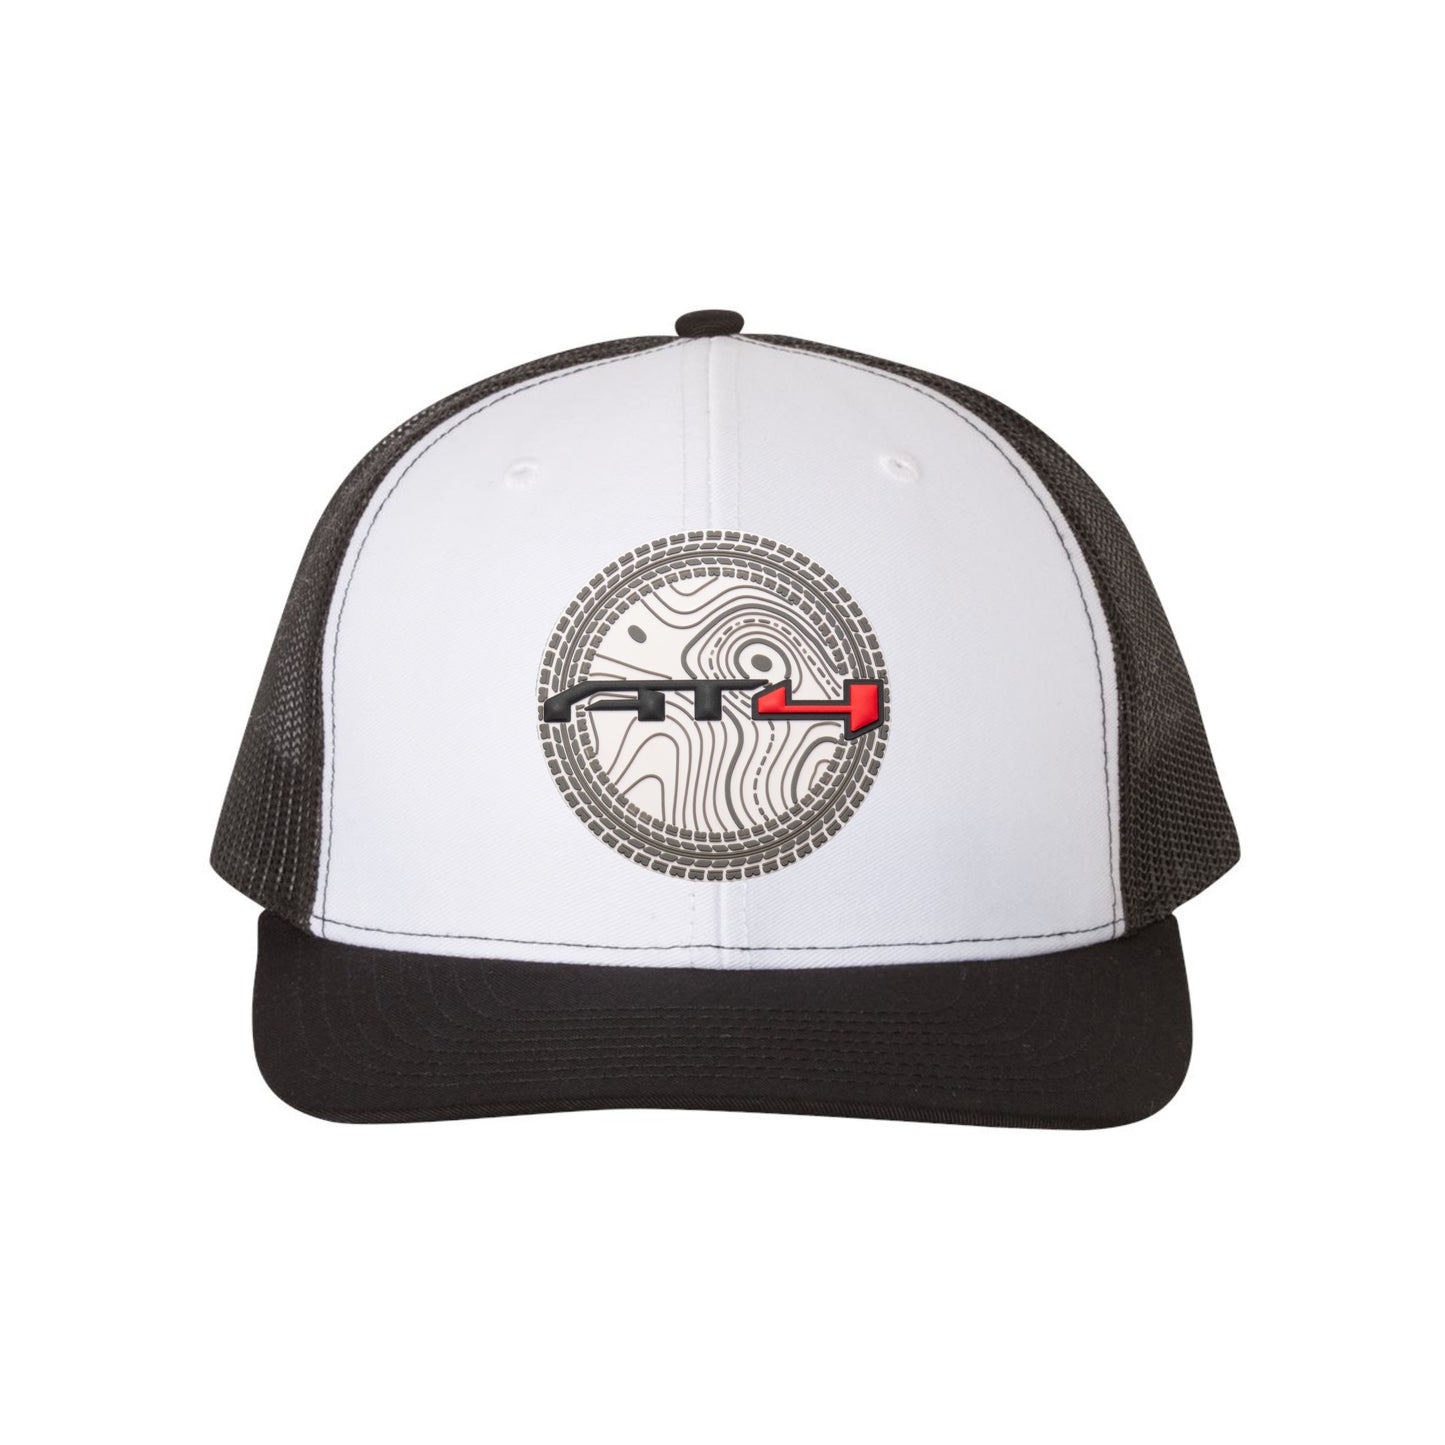 AT4 3D Snapback Trucker Hat- White/ Black - Ten Gallon Hat Co.